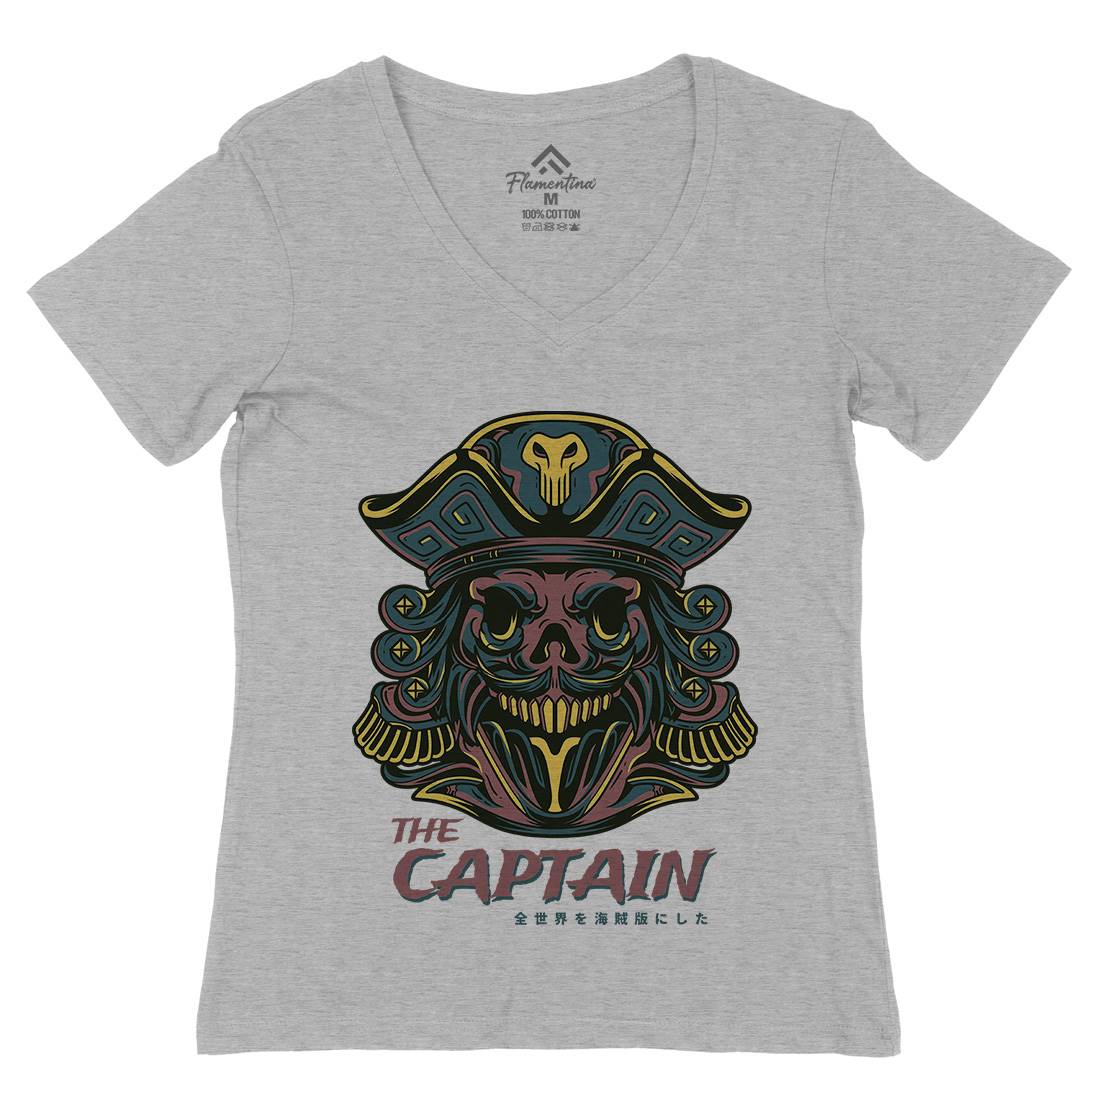 Captain Womens Organic V-Neck T-Shirt Navy D847